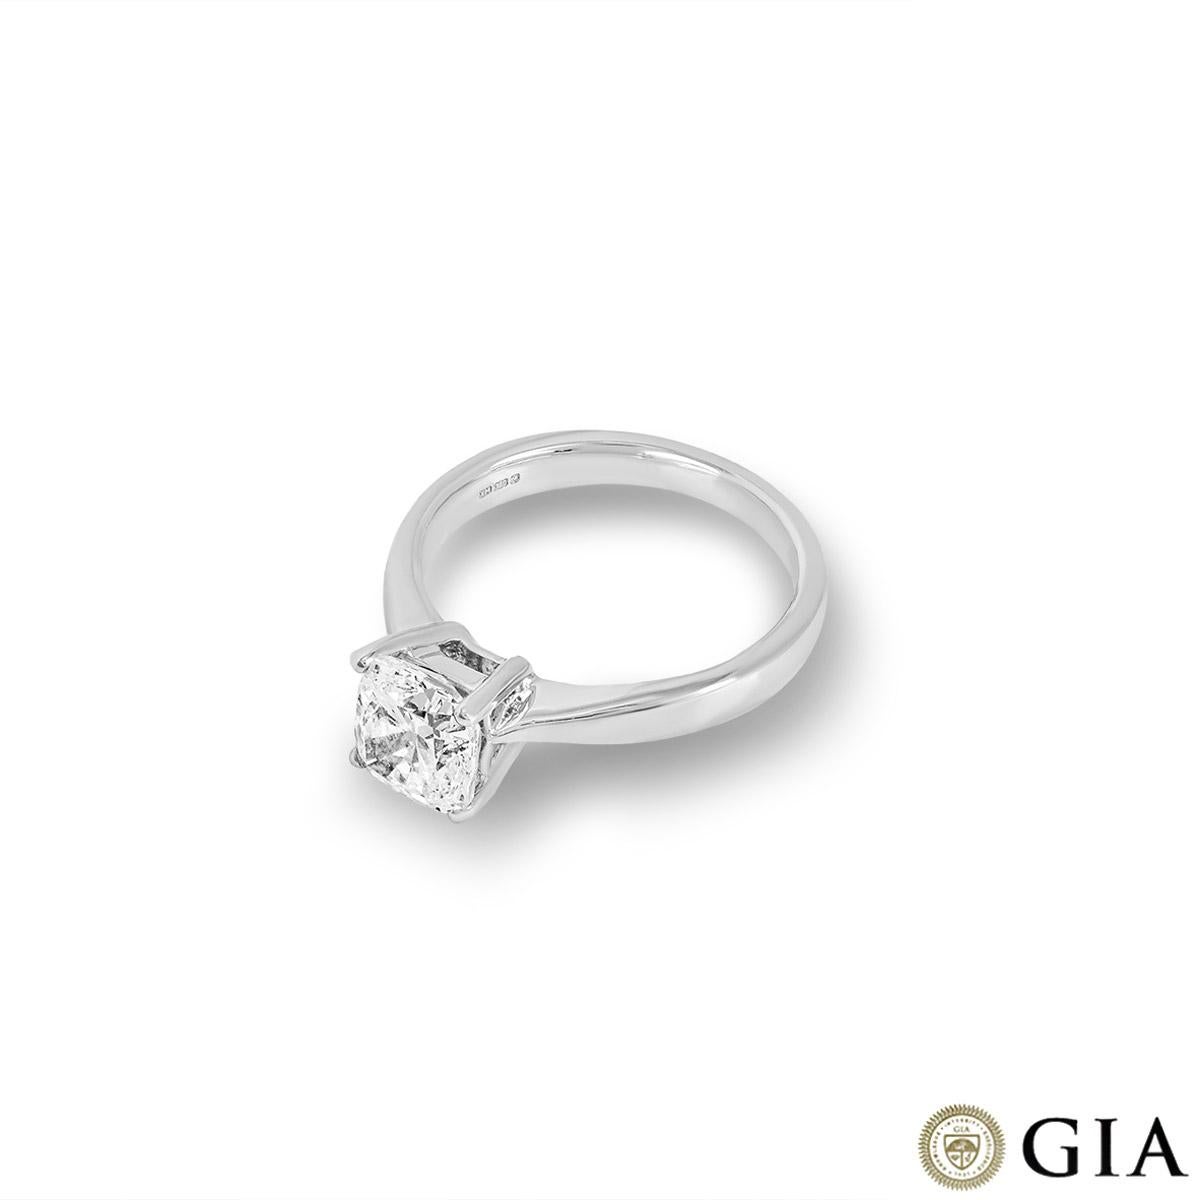 Women's GIA Certified White Gold Cushion Cut Diamond Ring 1.66ct I/VS1 For Sale